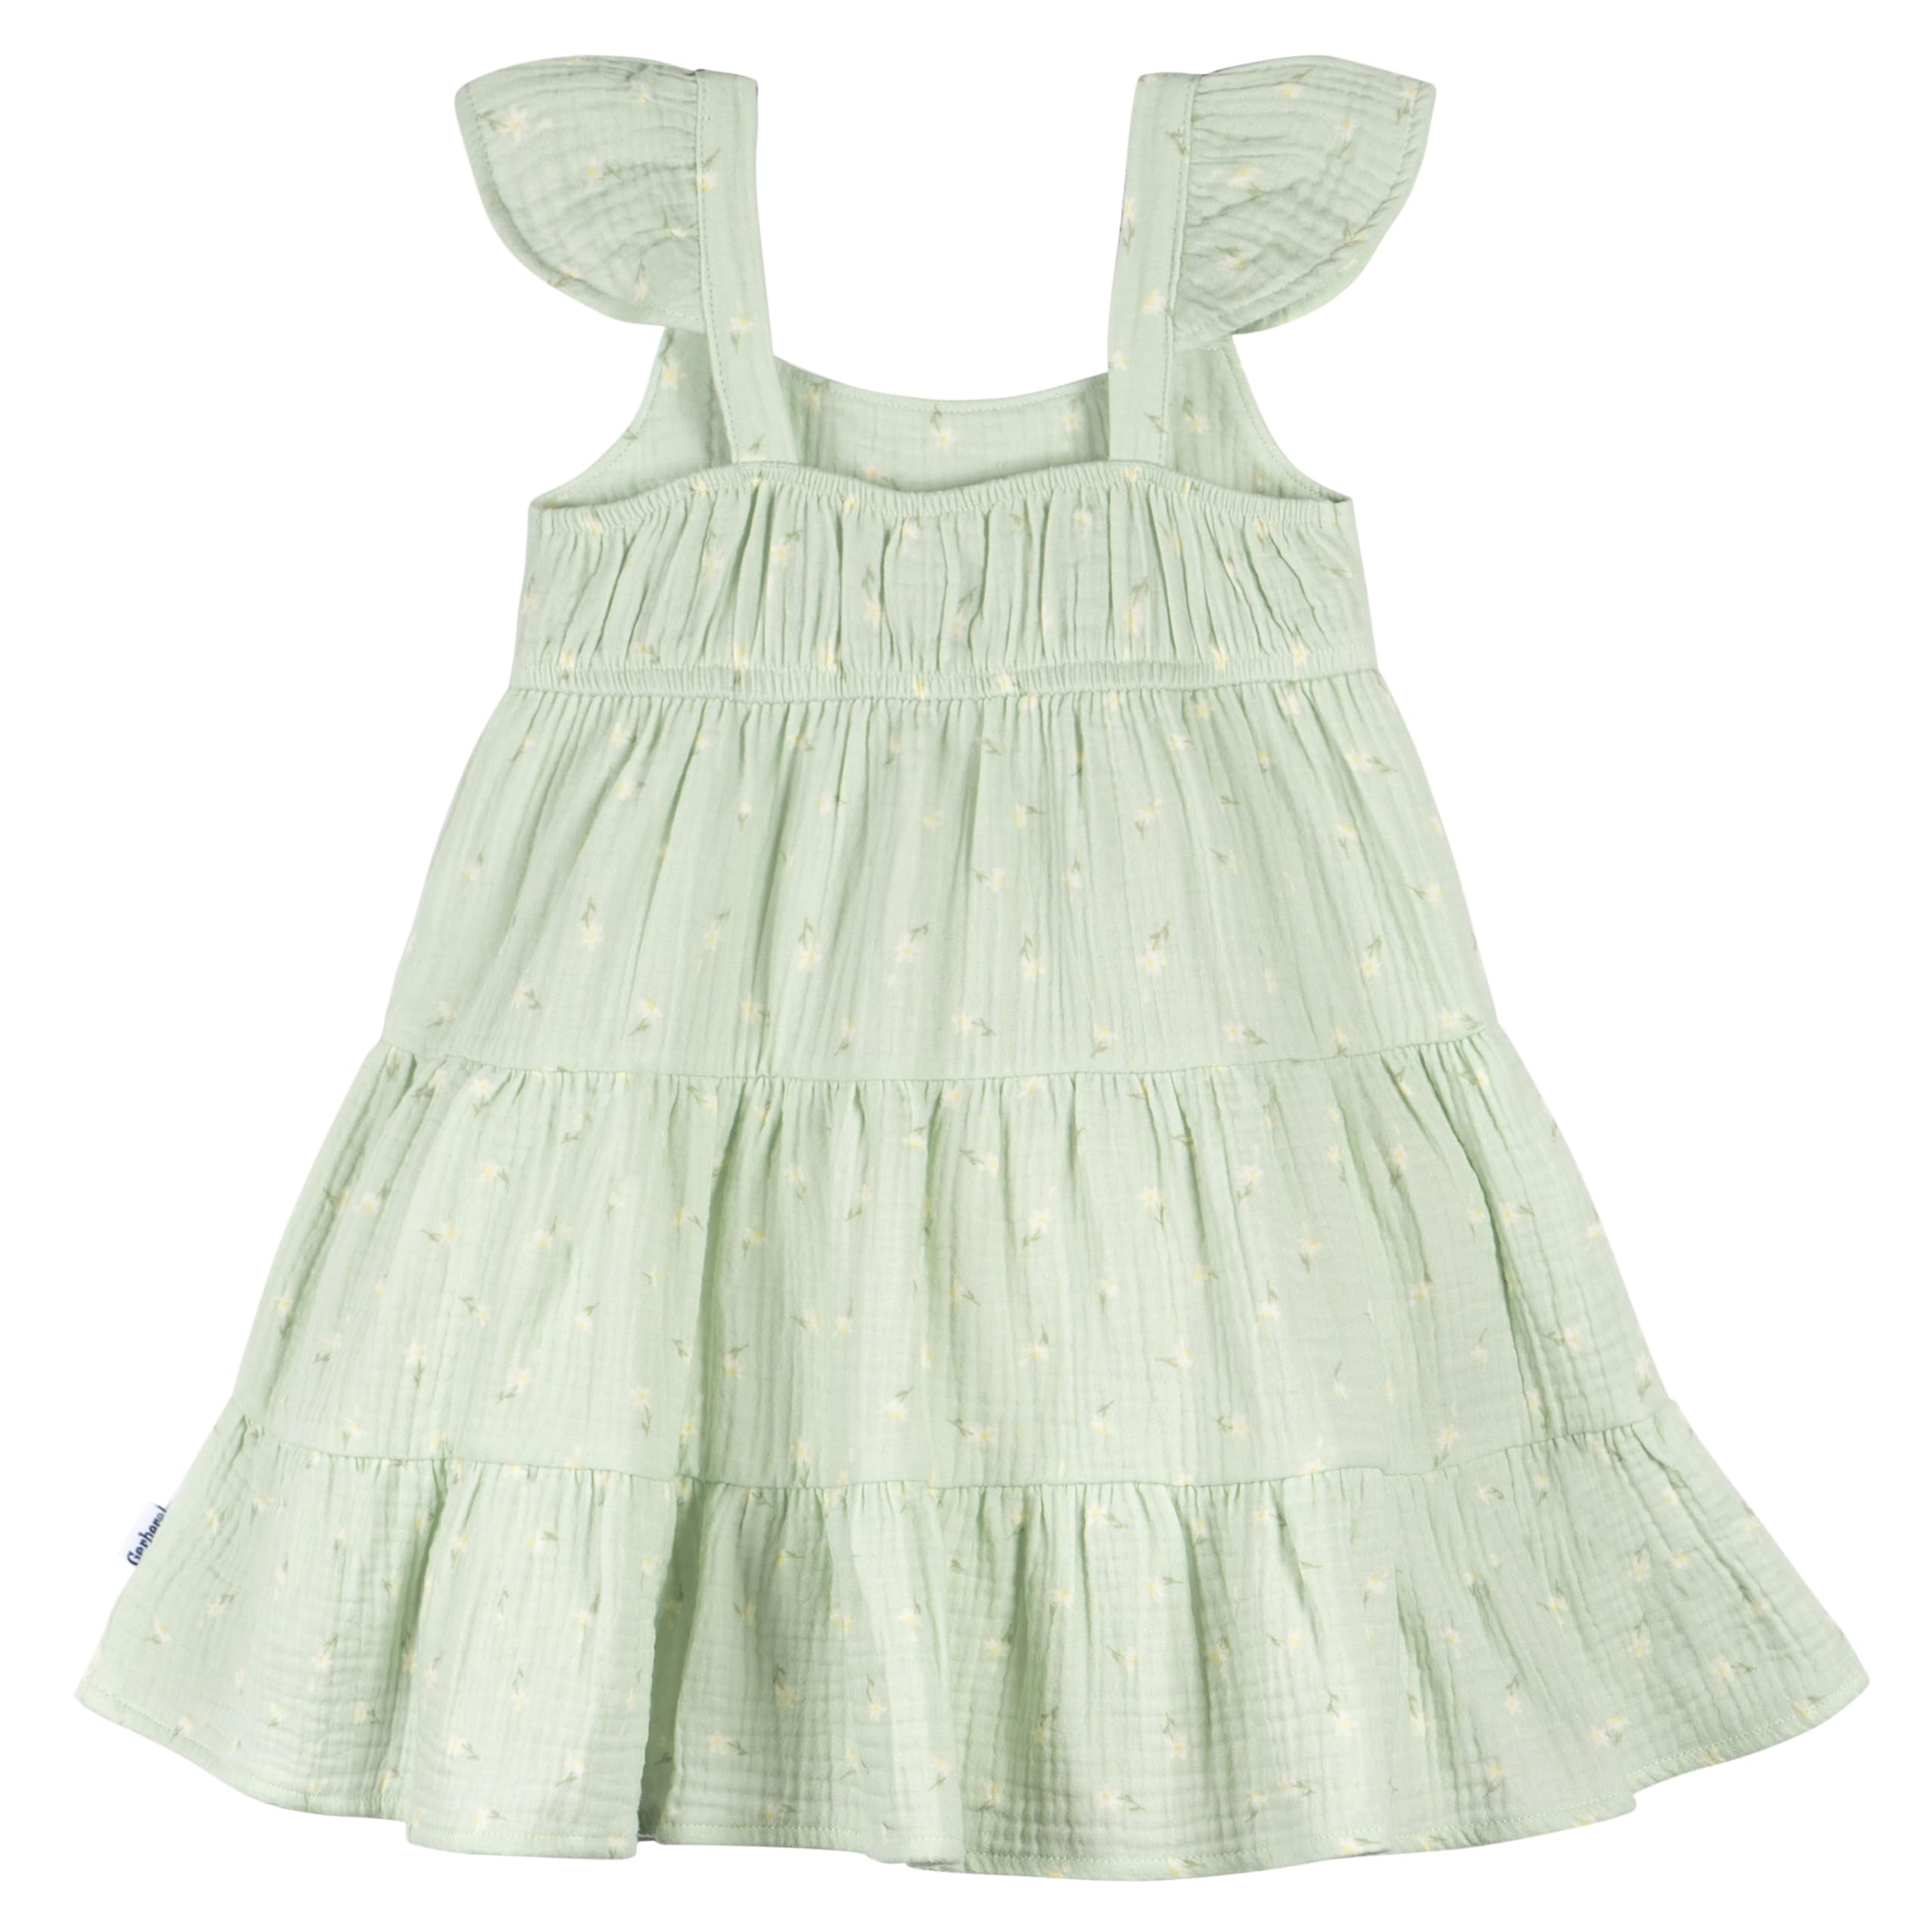 Gerber Girls' Toddler Sleeveless Gauze Dress